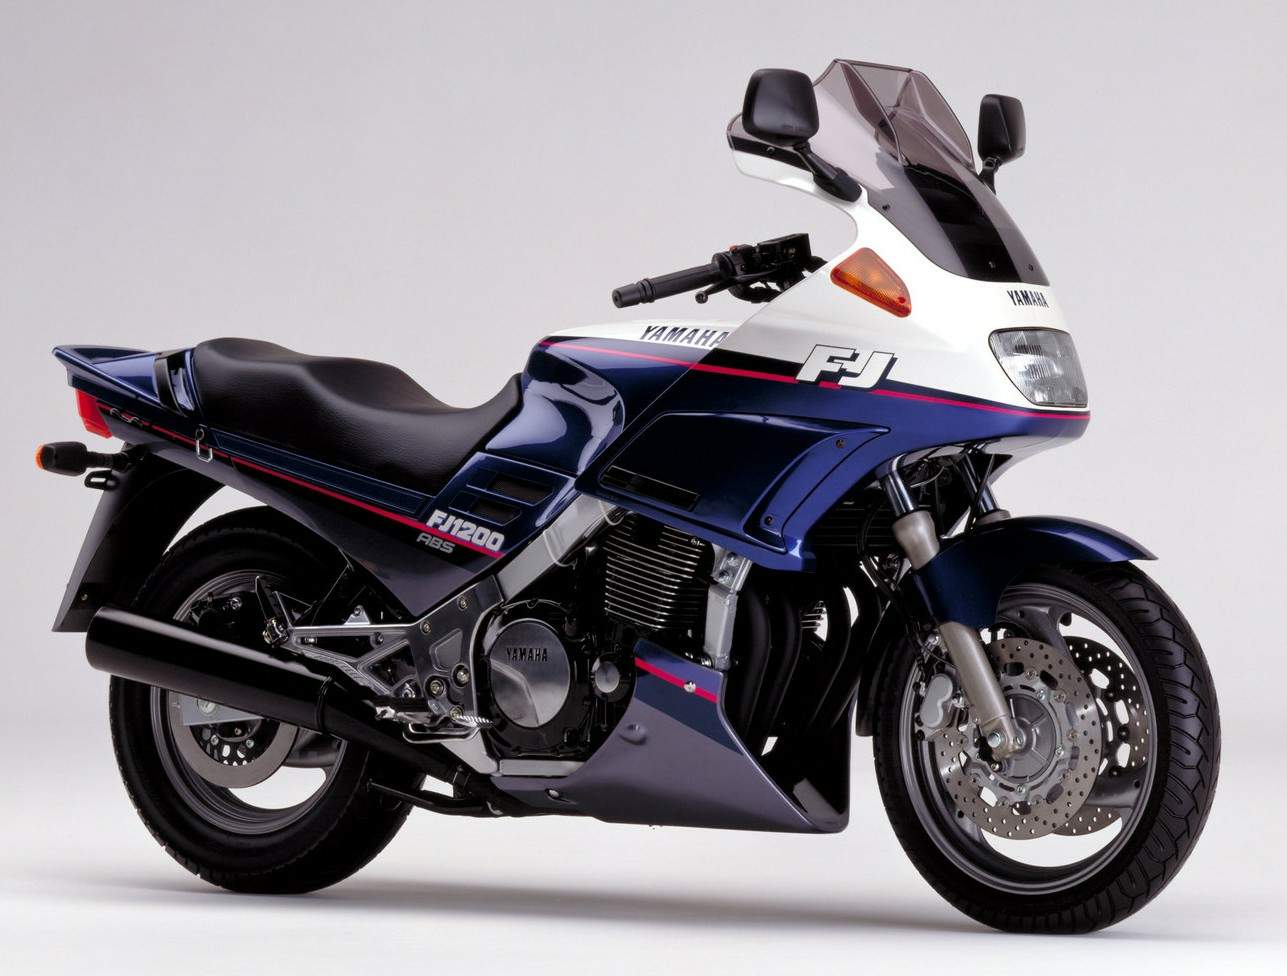 Мотоцикл Yamaha FJ 1200A 1994 фото